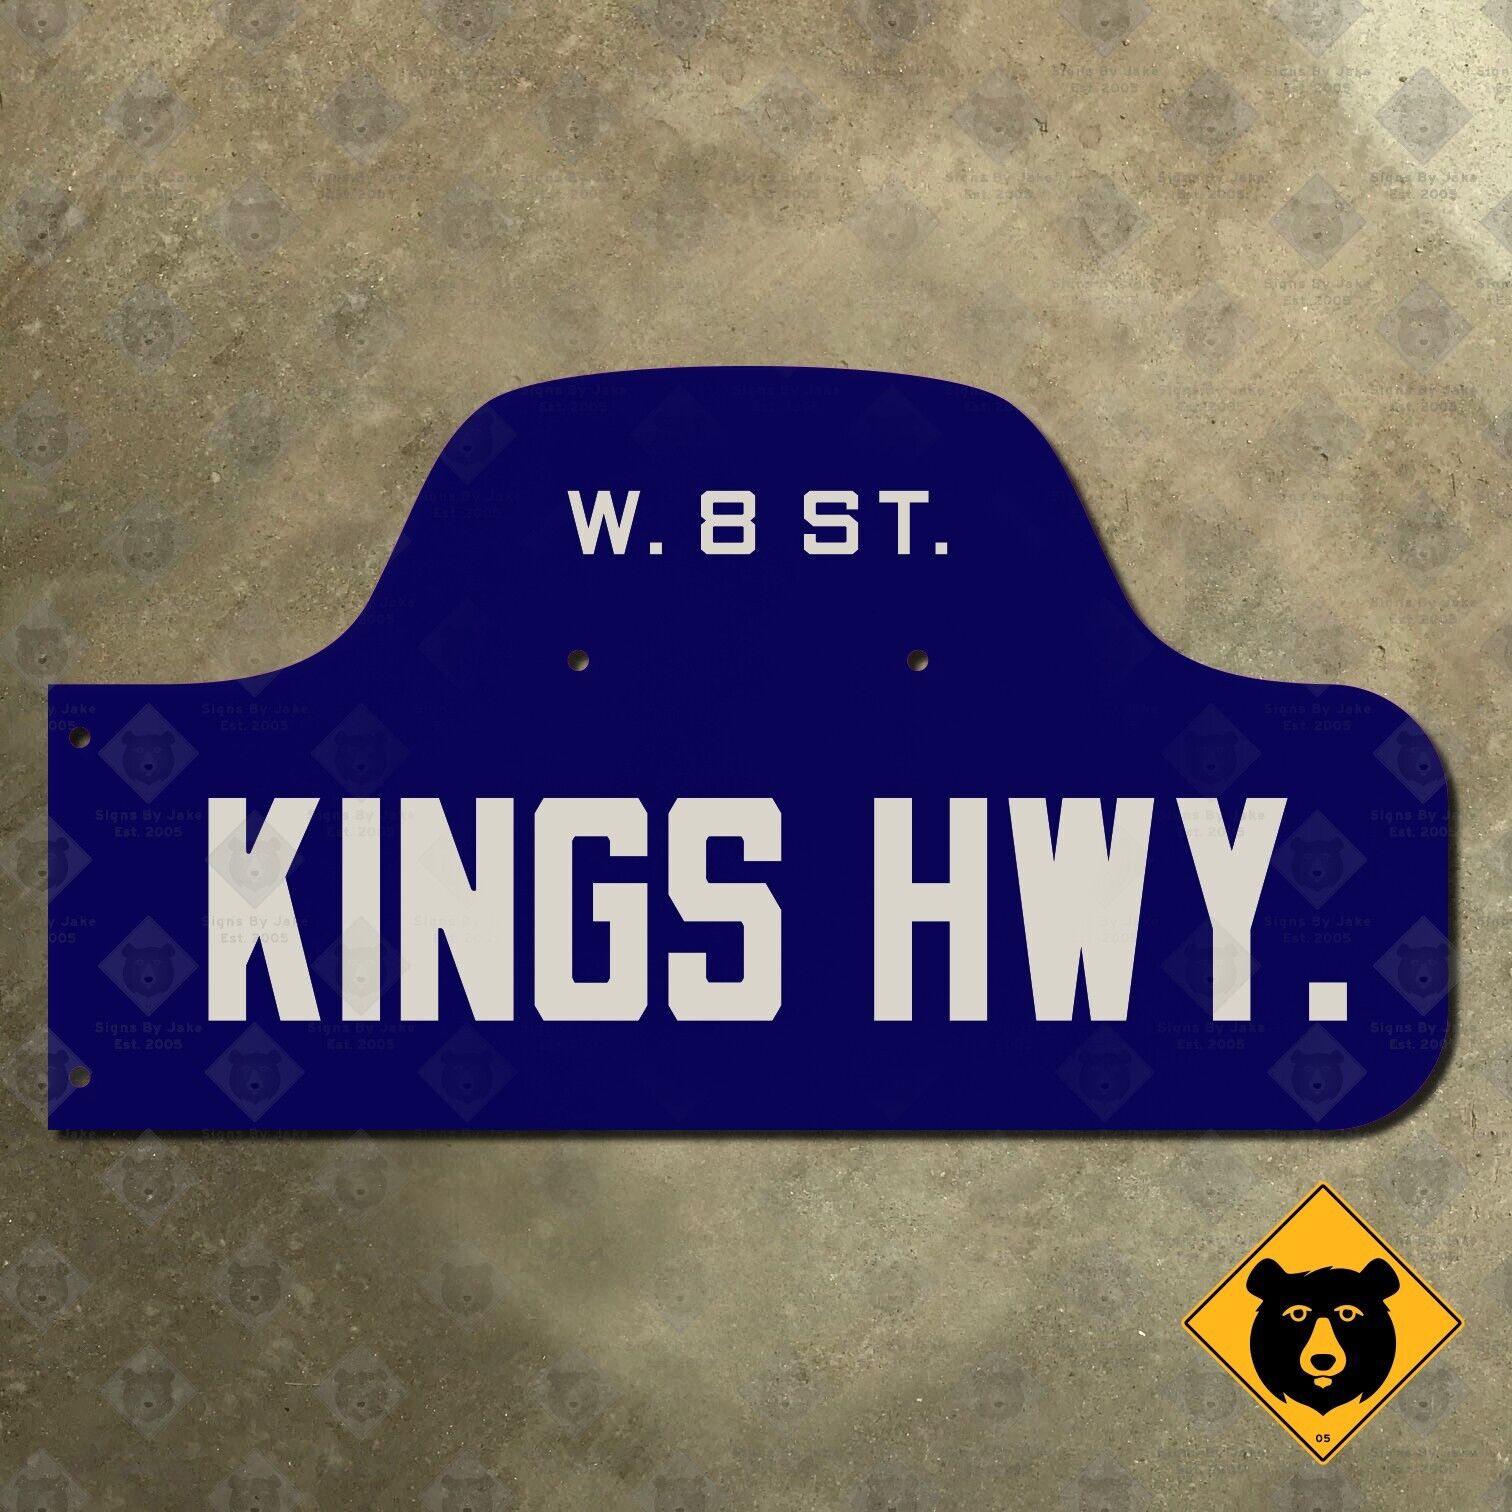 Brooklyn New York Kings Highway West 8th Street humpback road sign 16x9